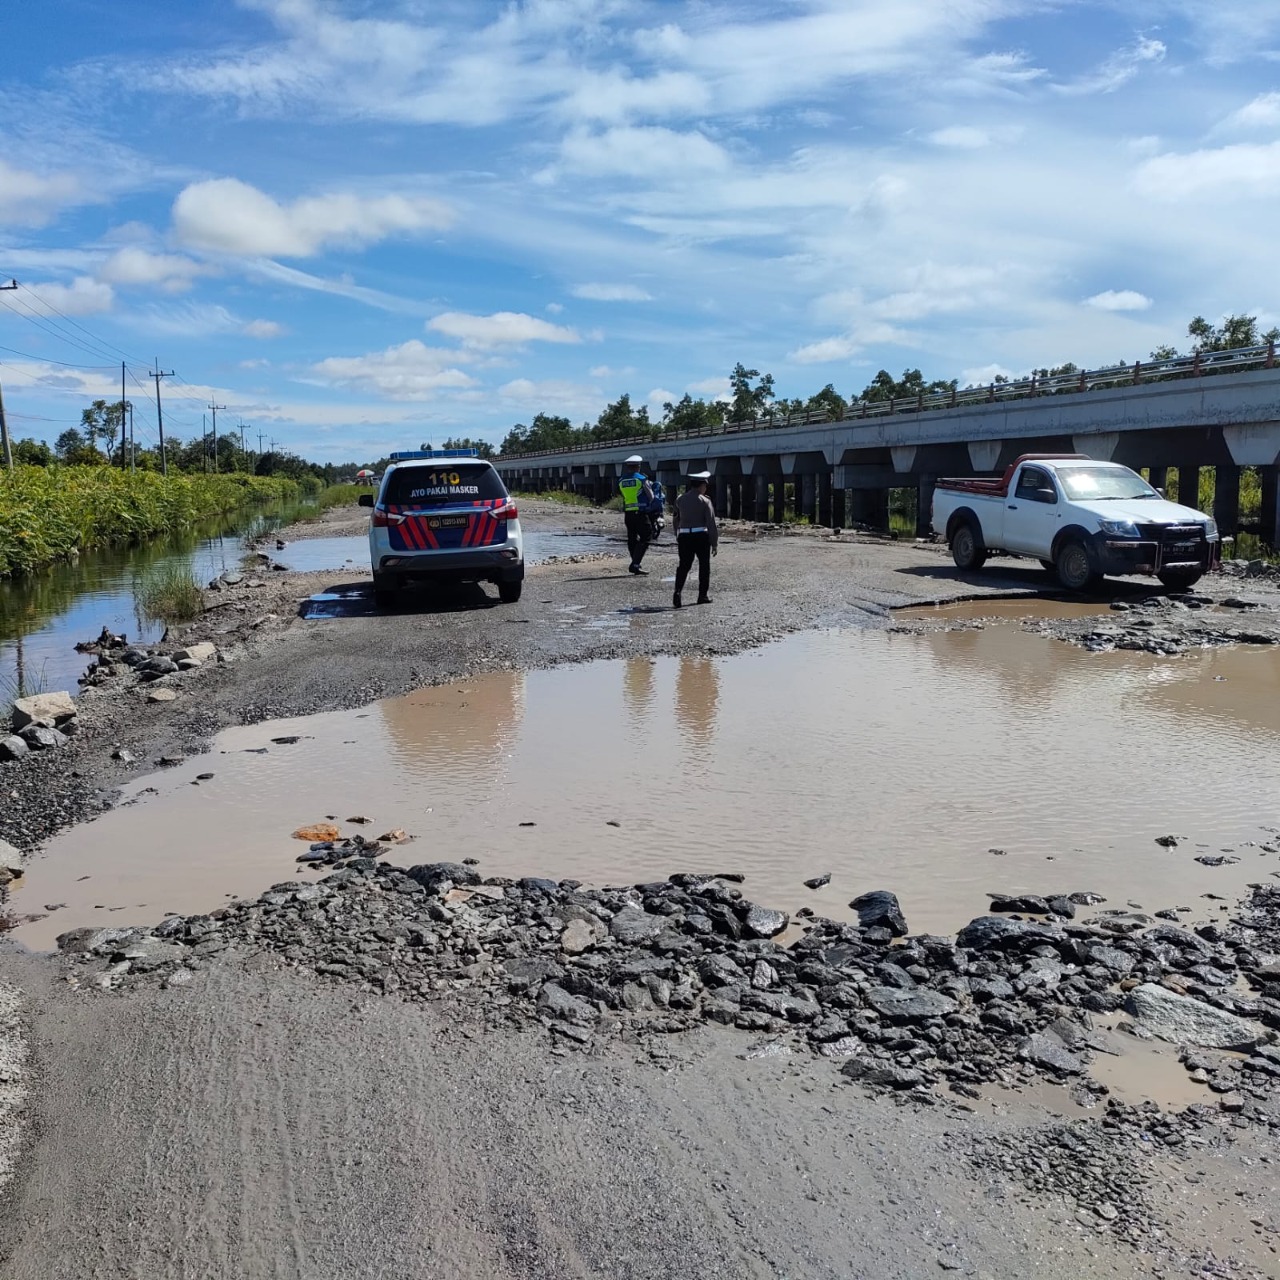 Cegah Kecelakaan, PJR Ditlantas Polda Kalteng Survei Jalan Rusak